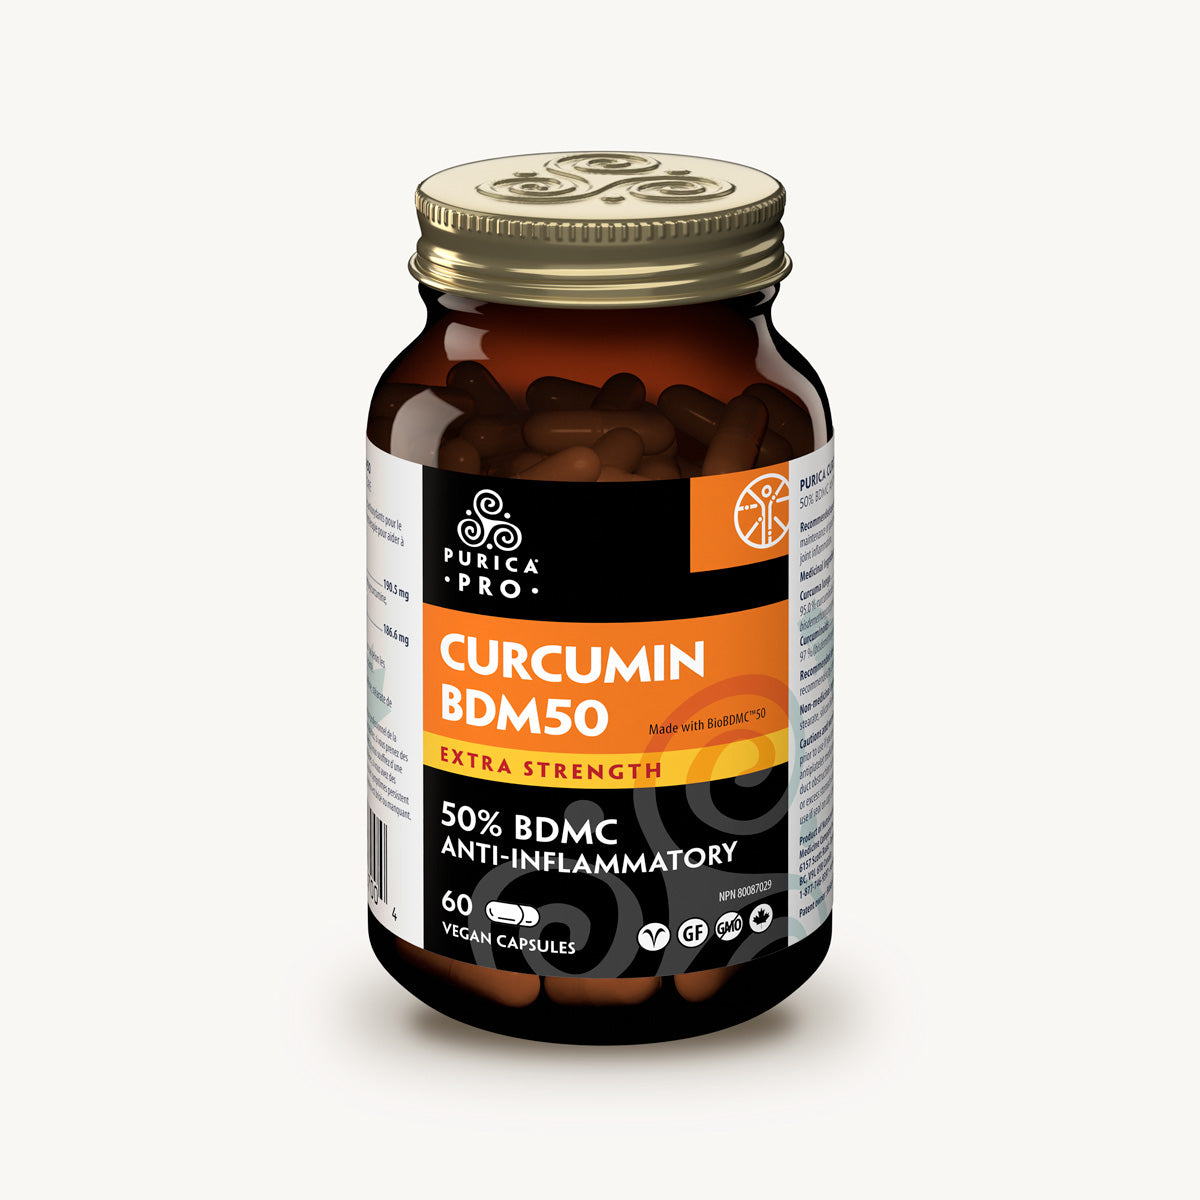 Curcumin BDM50